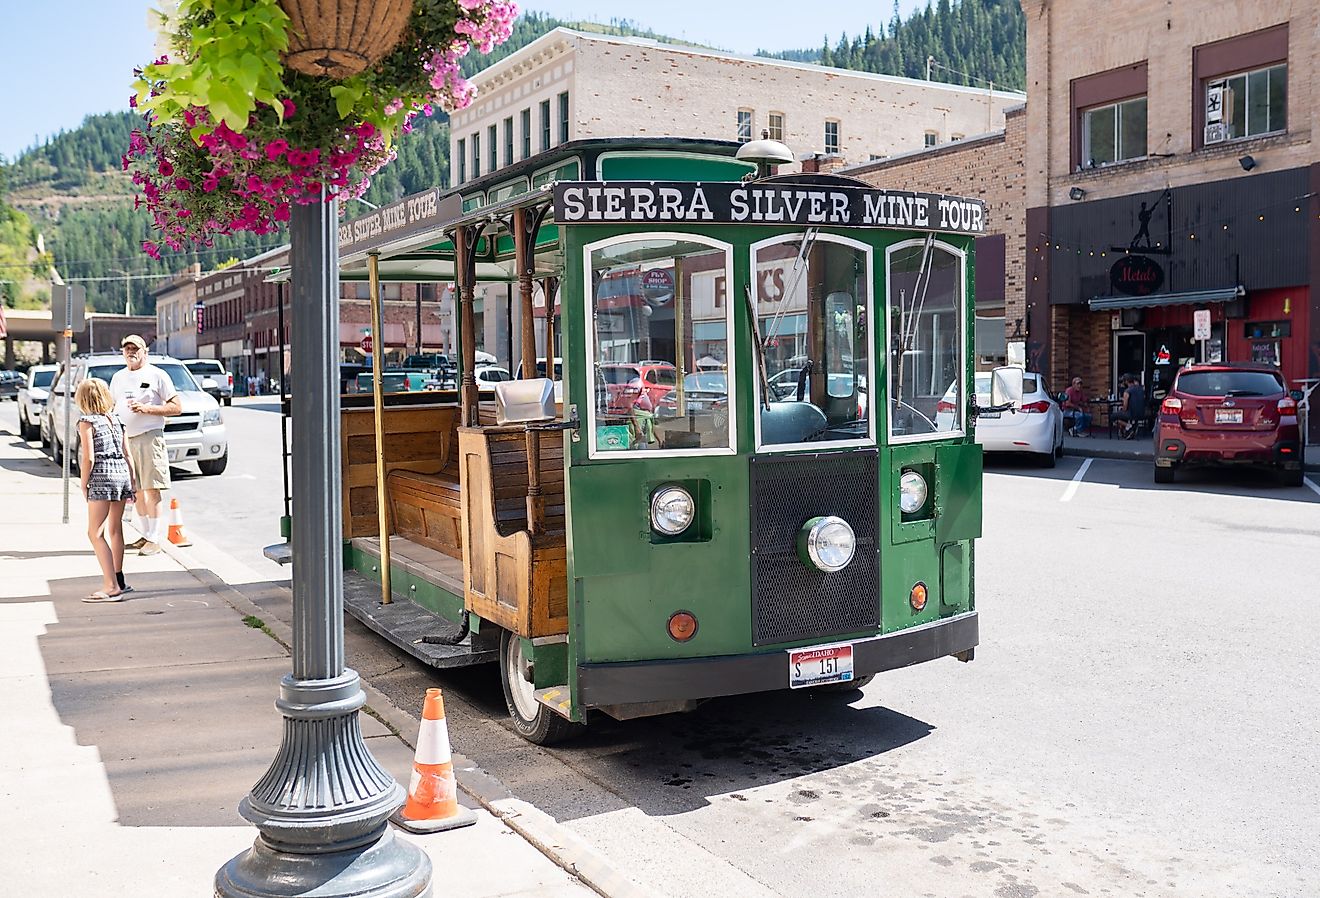 Sierra silver mine green tour bus in Wallace, Idaho. Image credit Alexander Oganezov via Shutterstock